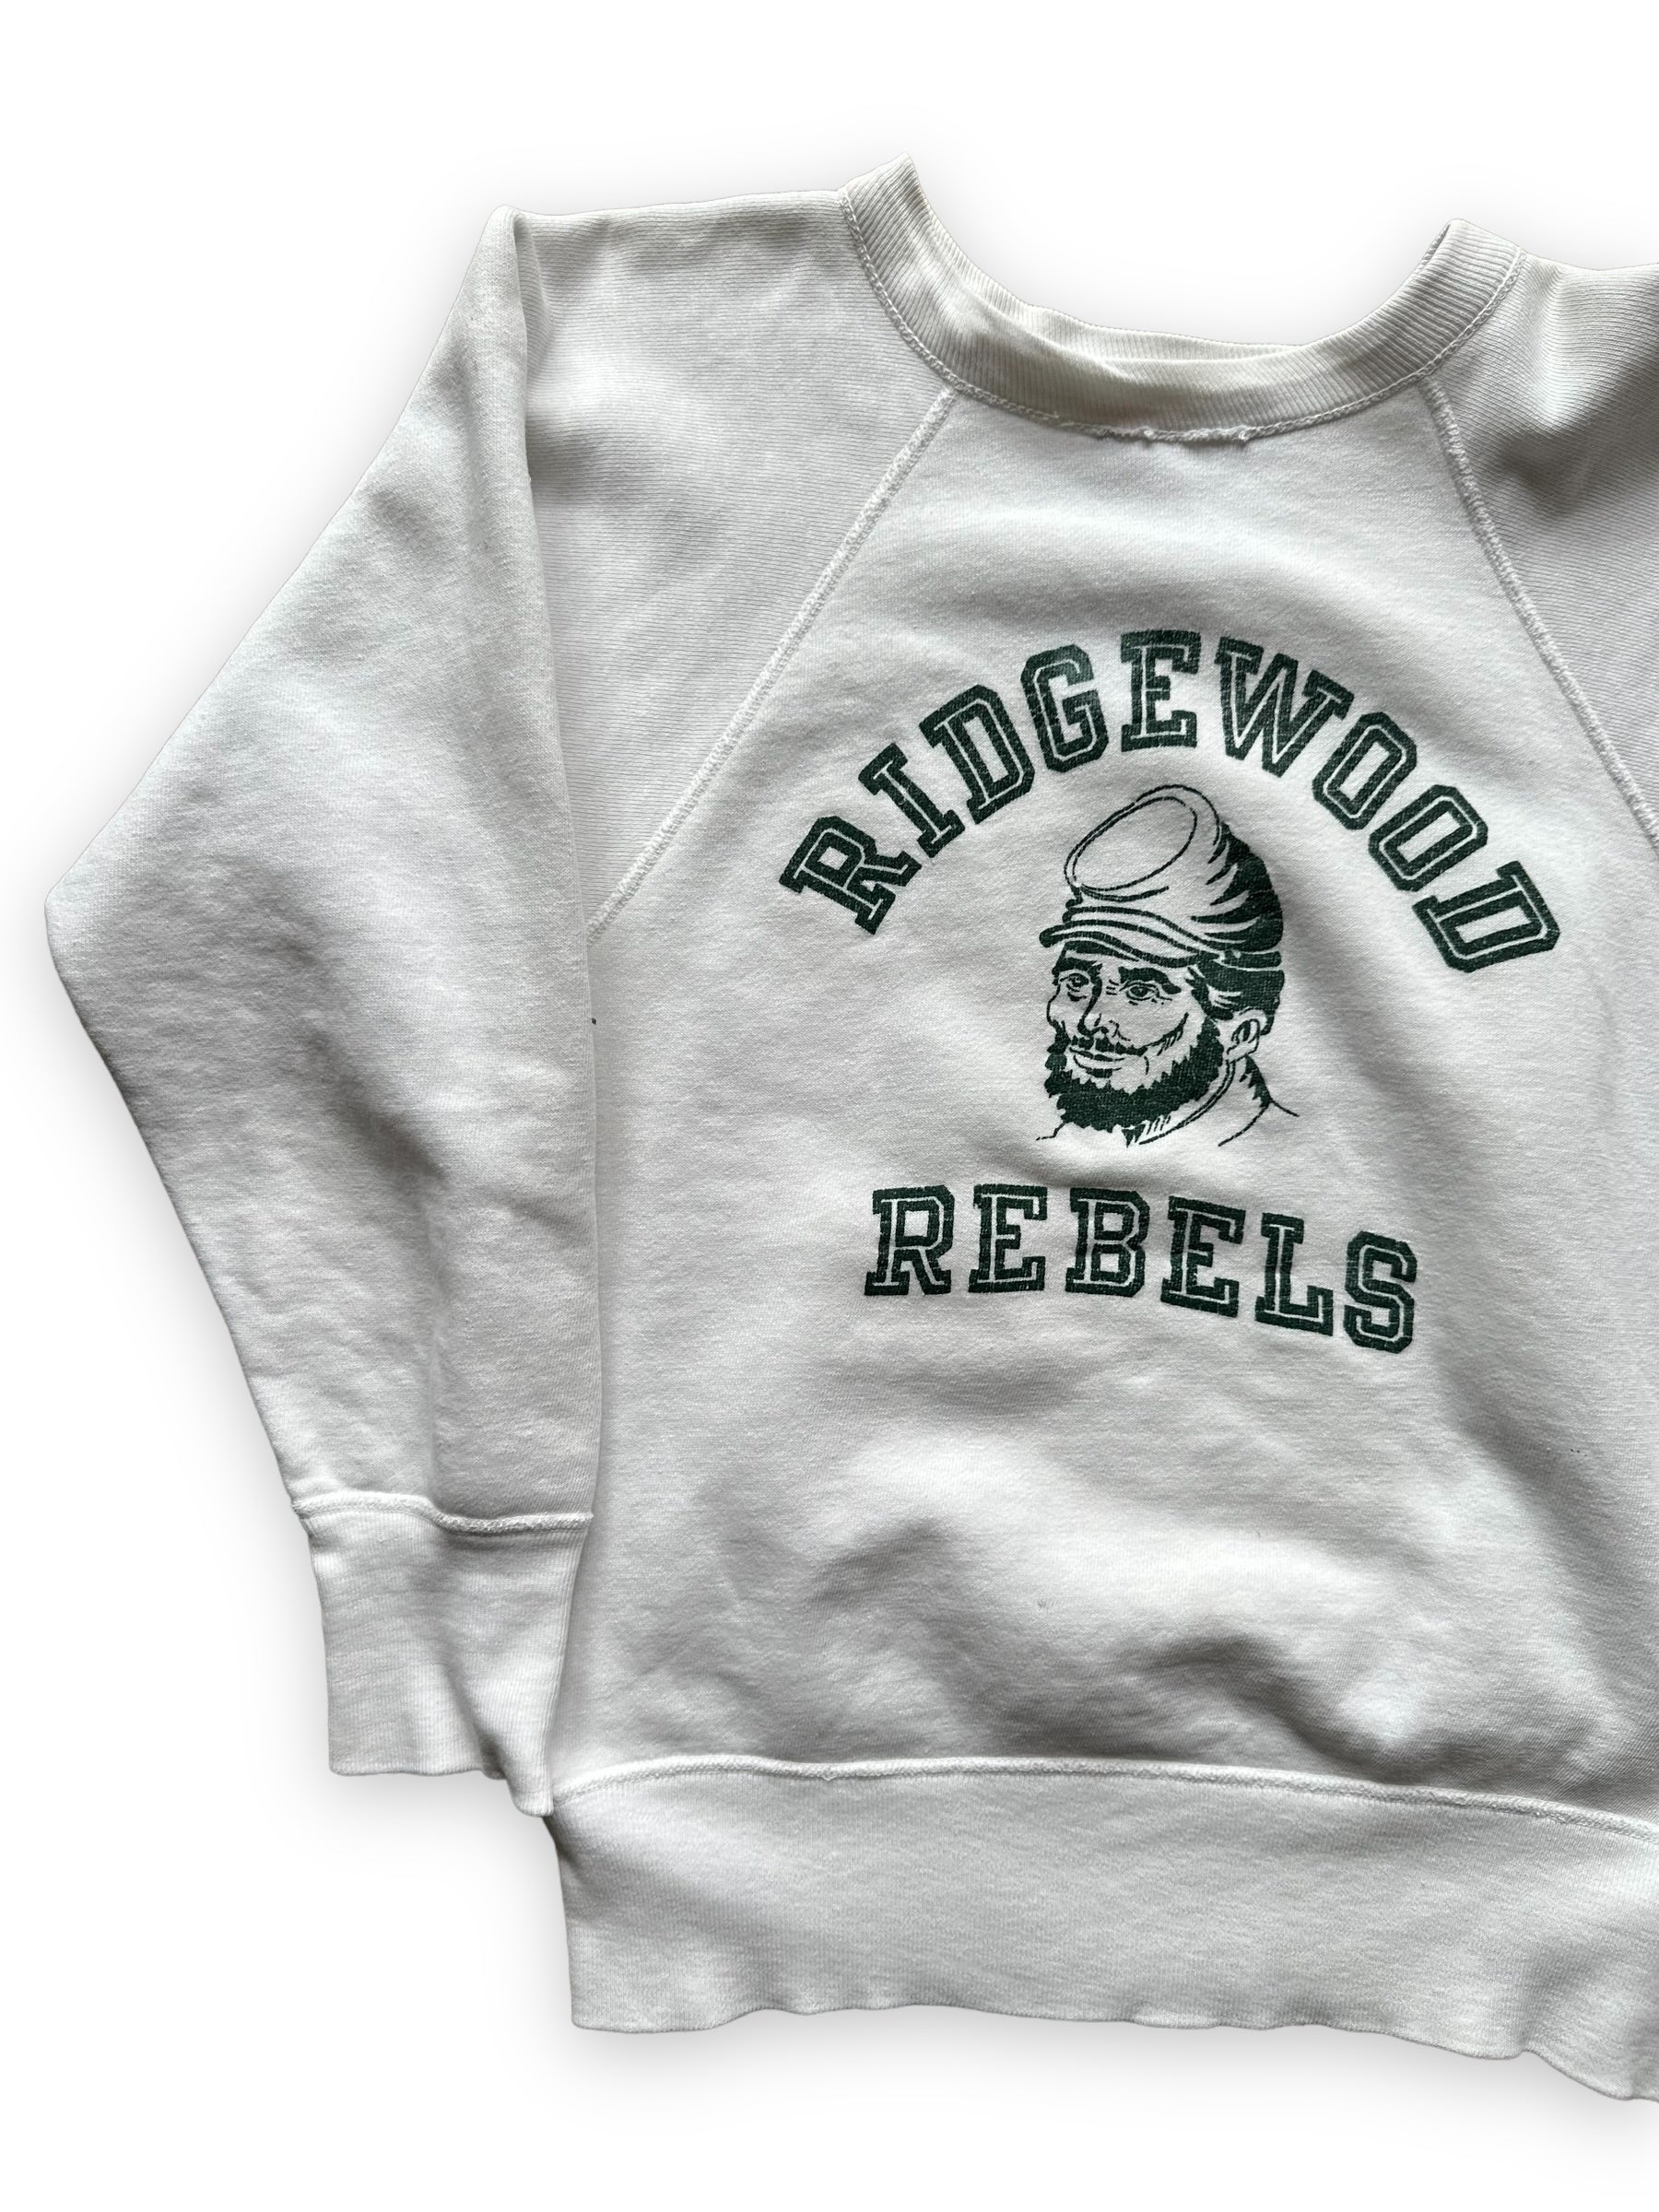 Vintage Champion Running Man Ridgewood Rebels Crewneck Sweatshirt | Vi –  The Barn Owl